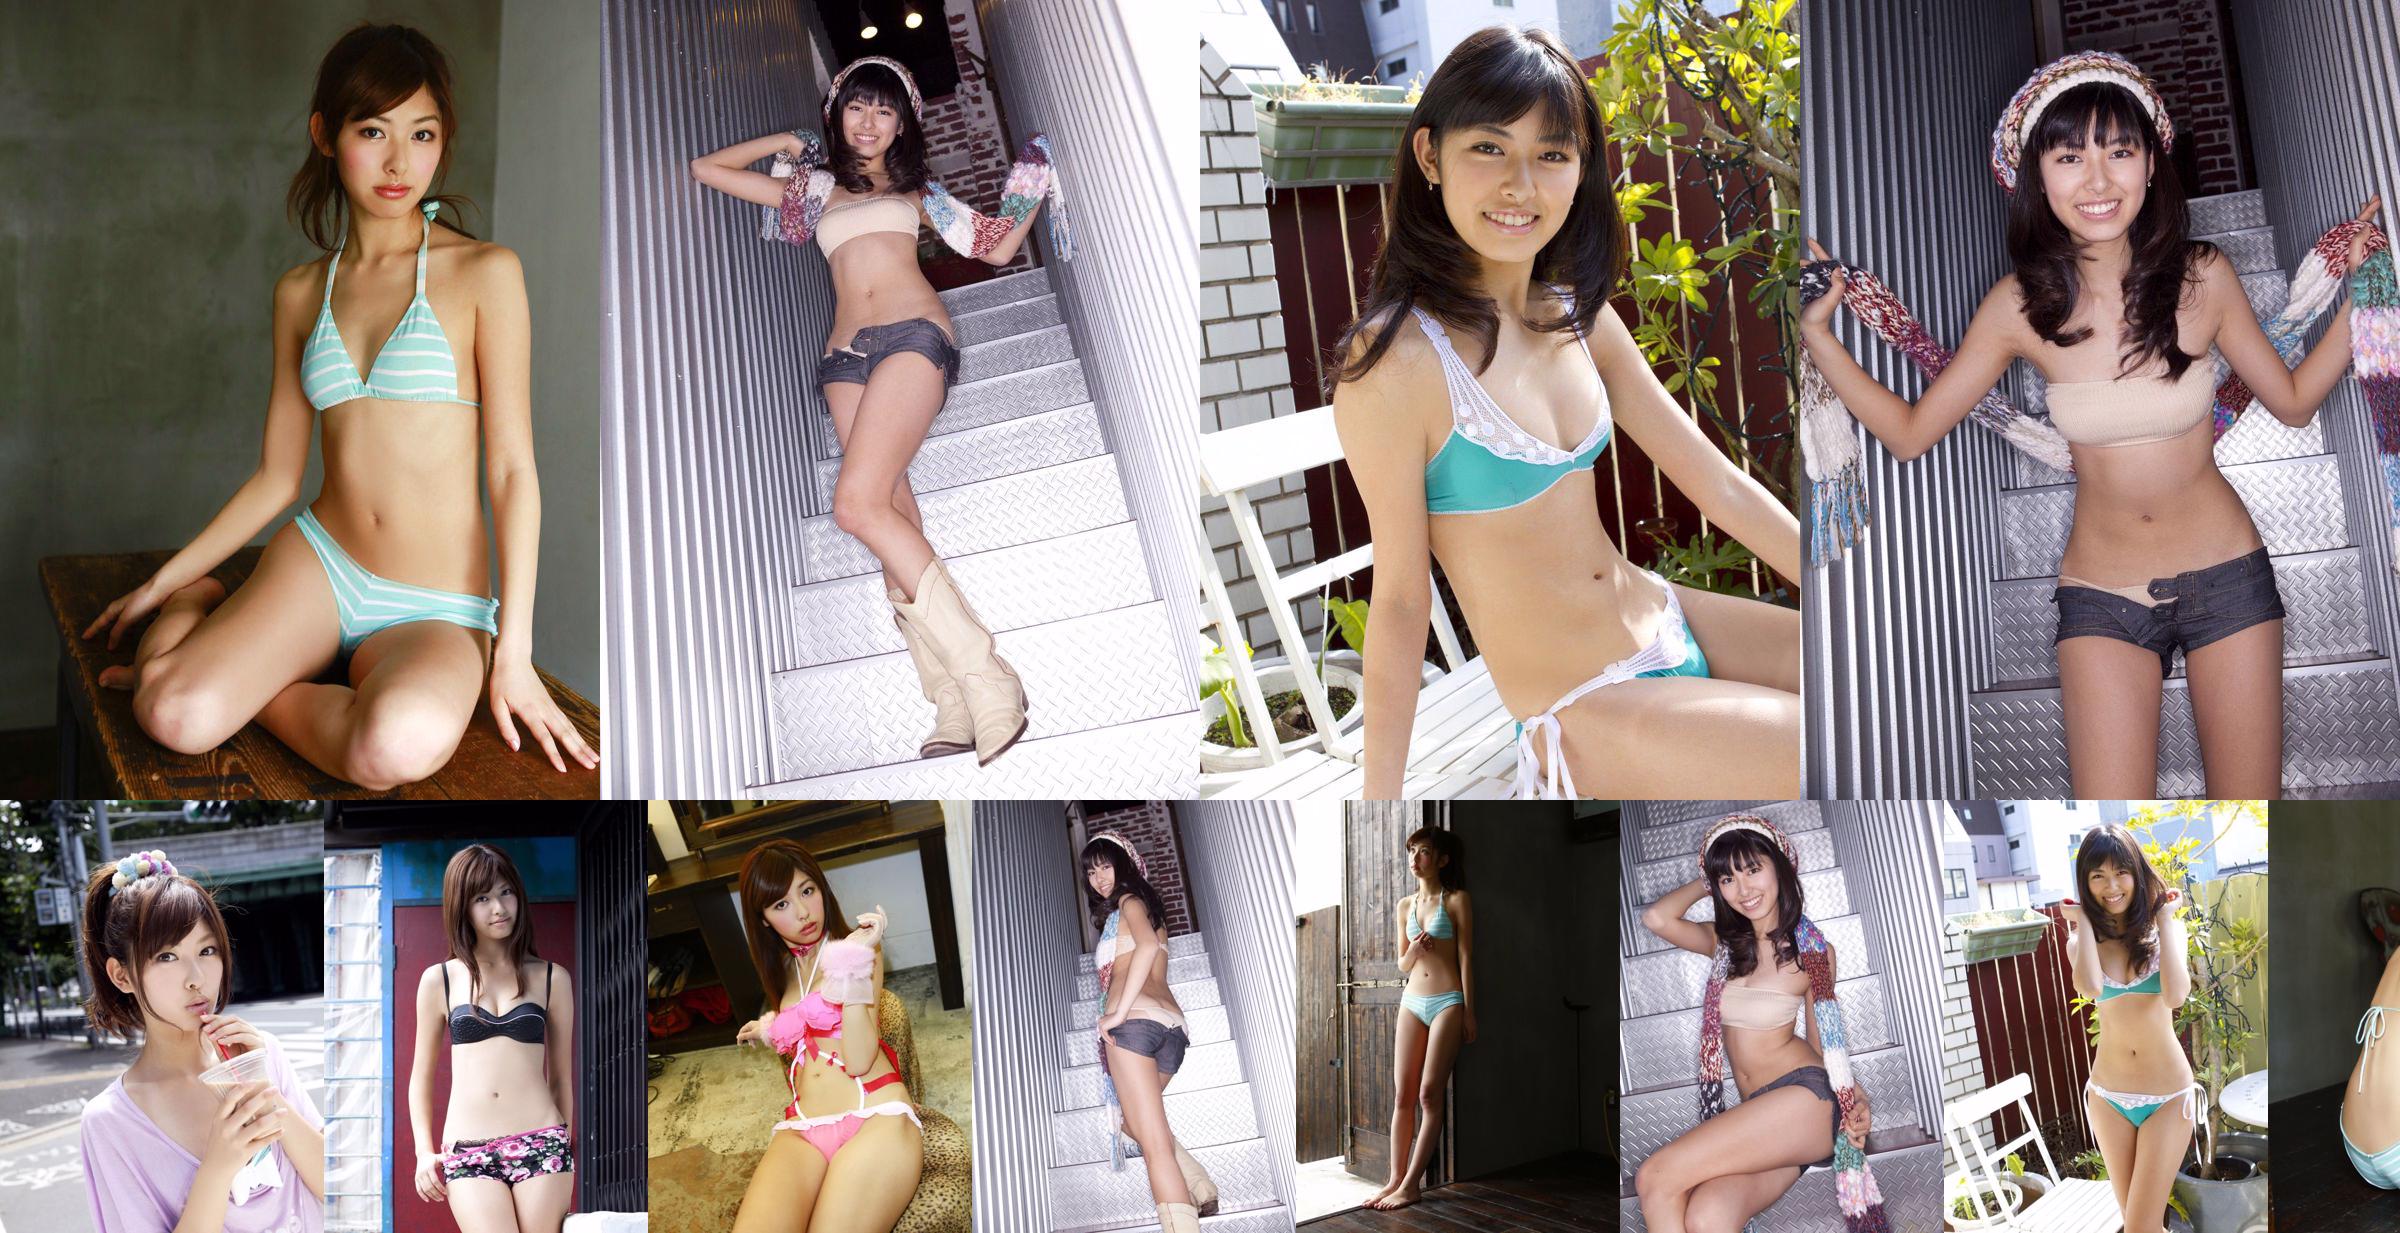 [Sabra.net] COVER GIRl Tachibana Yurika Yurika Tachibana / ยูริกะทาจิบานะ No.386f8c หน้า 1